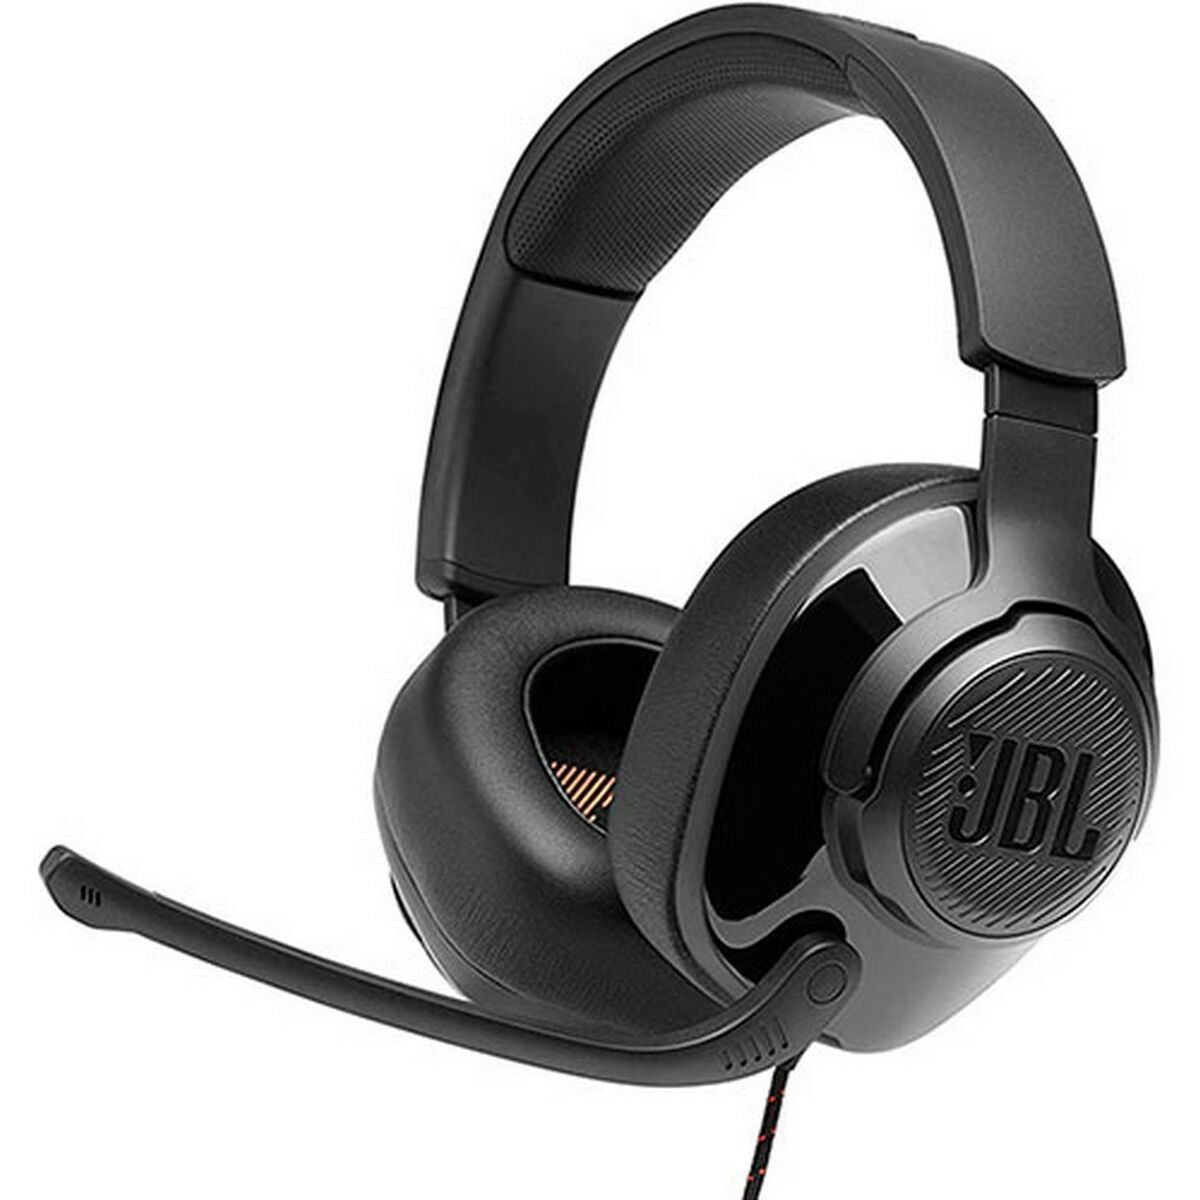 Kaufe Kopfhörer mit Mikrofon JBL Quantum 200 Gaming bei AWK Flagship um € 70.00